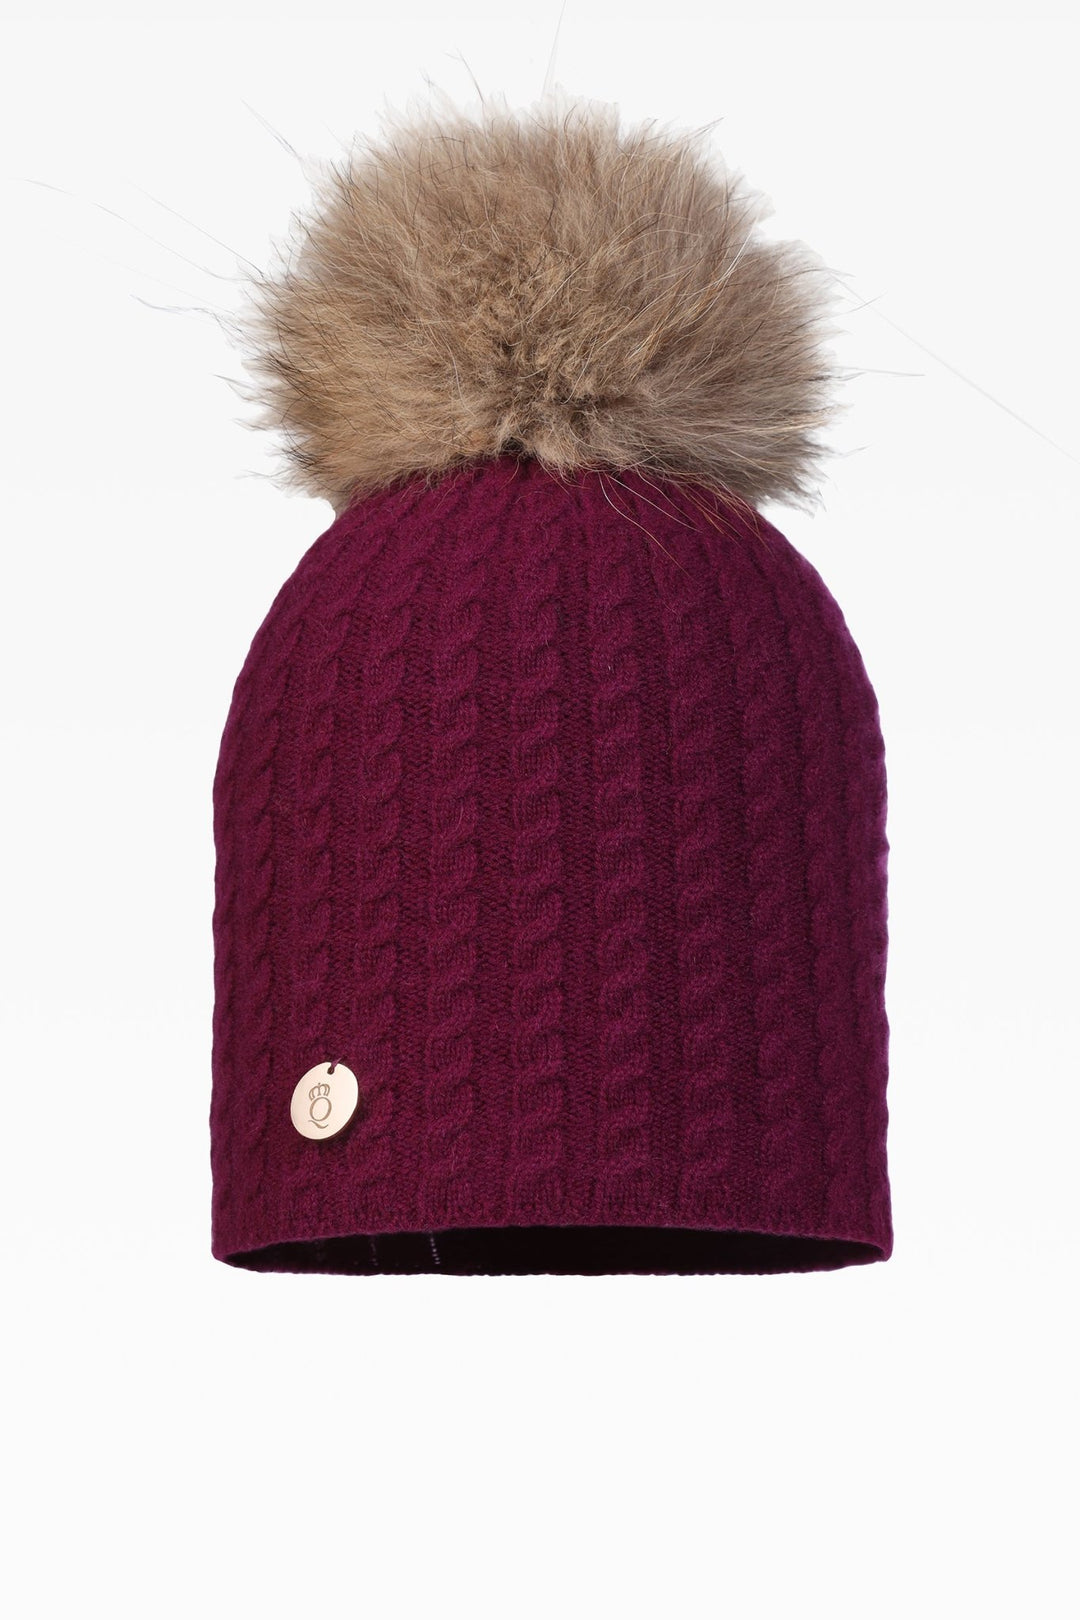 Heidi Cable Pom Pom Hat - Real Fur - Dunedin Cashmere